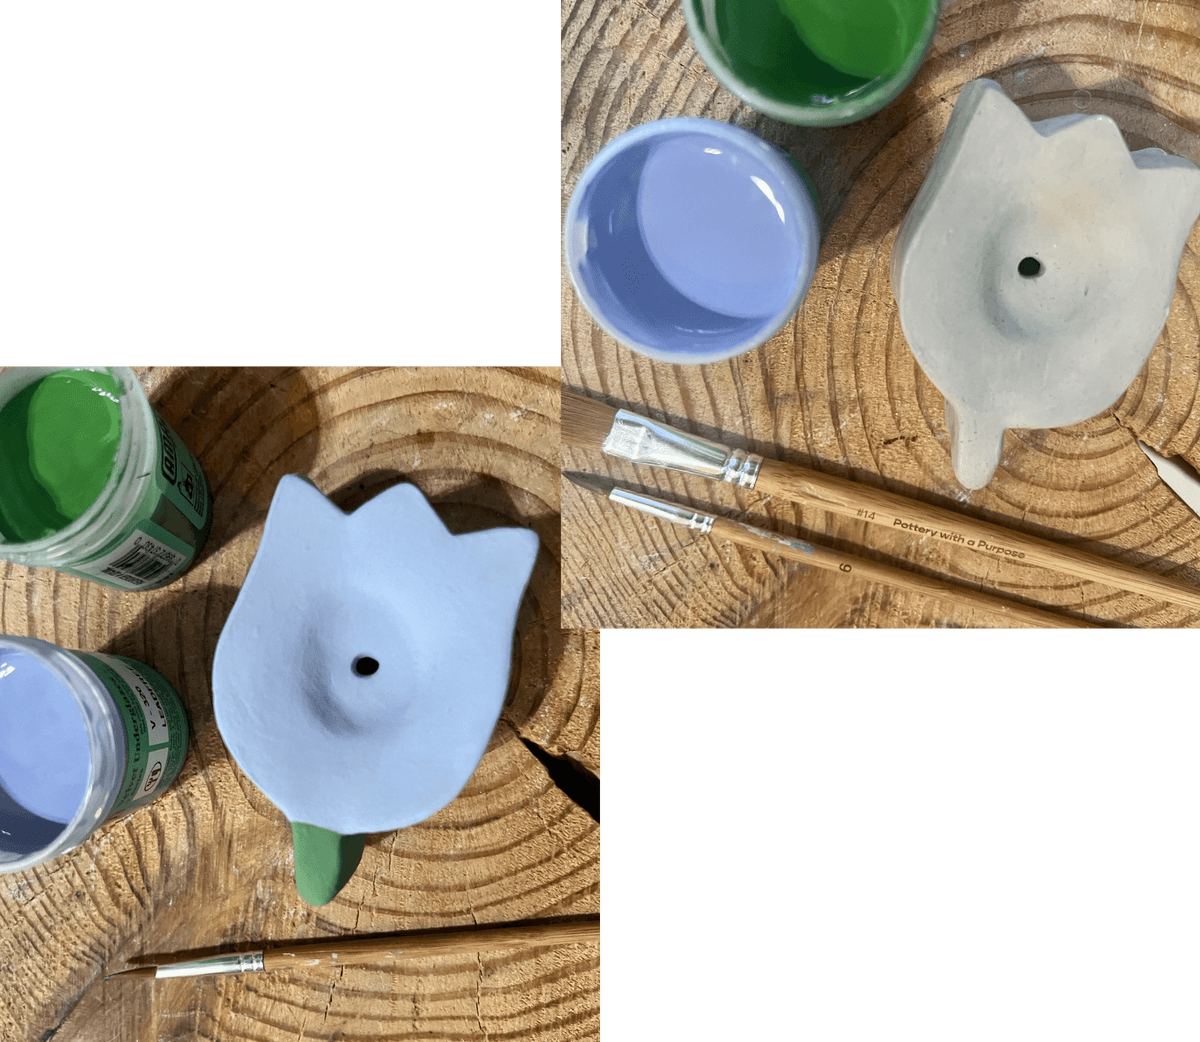 Puff Puff Pottery Class: Make Your Own Ceramic Smokeware — 4/18 (Cambridge MA)